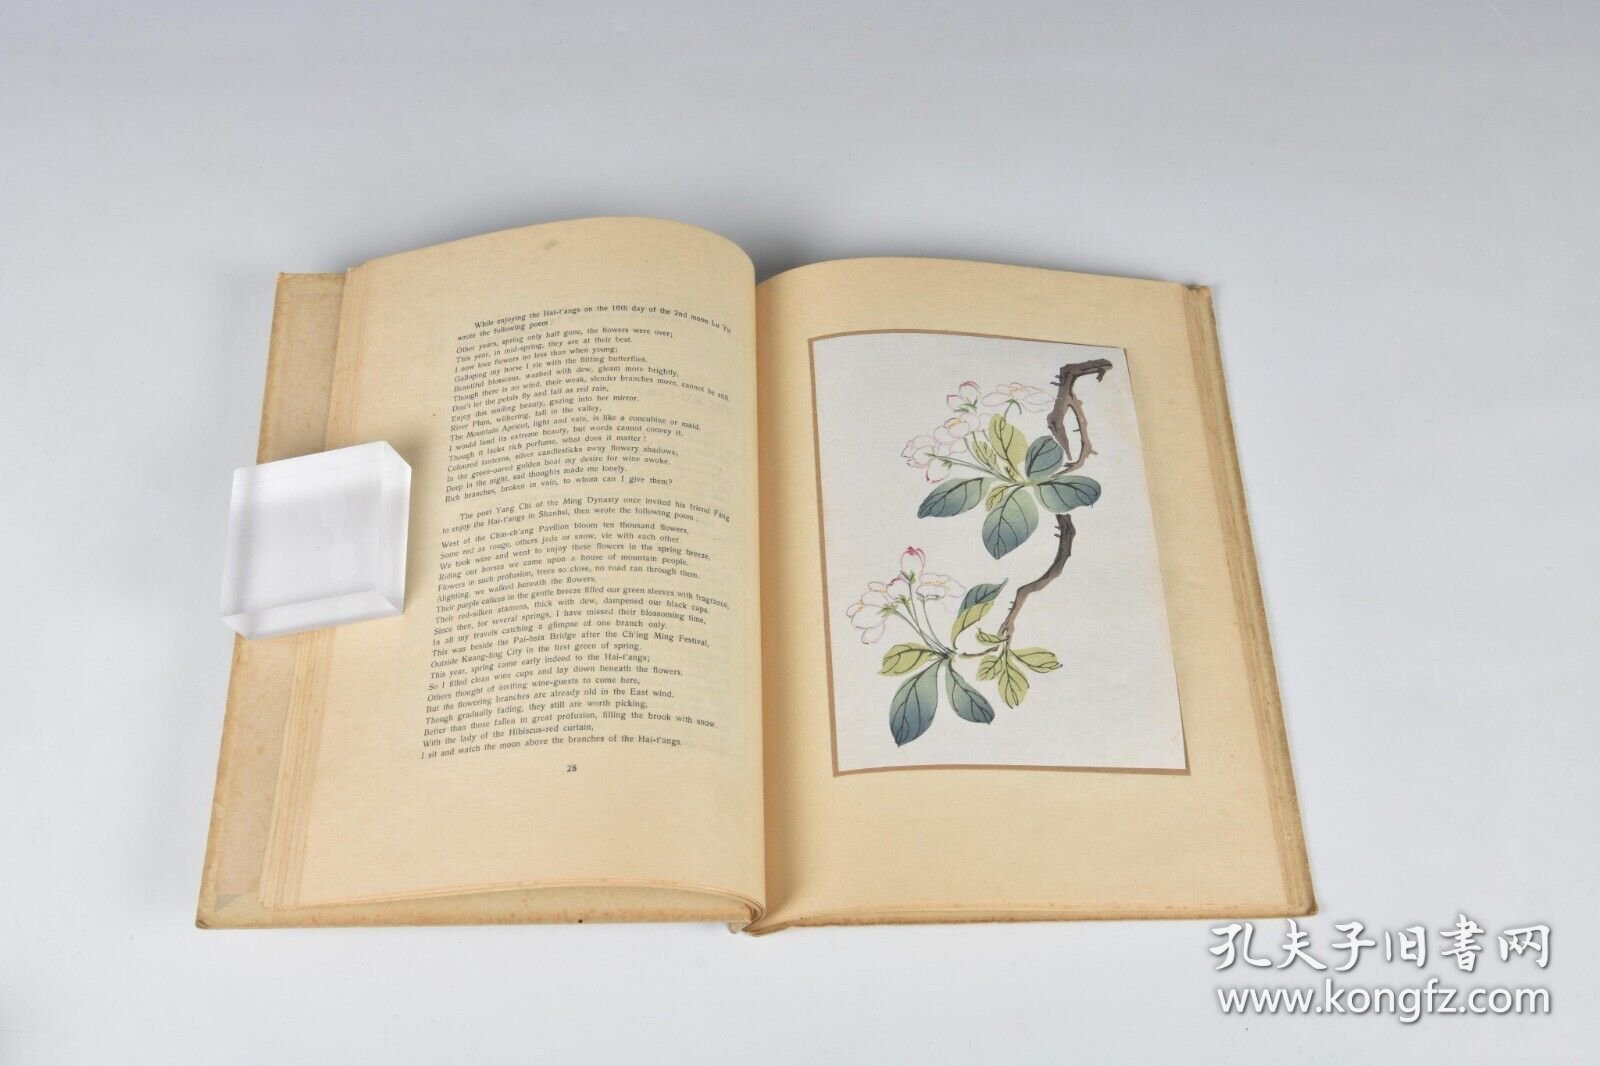 1942年版《群芳图谱》 （FRAGRANCE FROM A CHINESE GARDEN）19幅木版水印花卉图